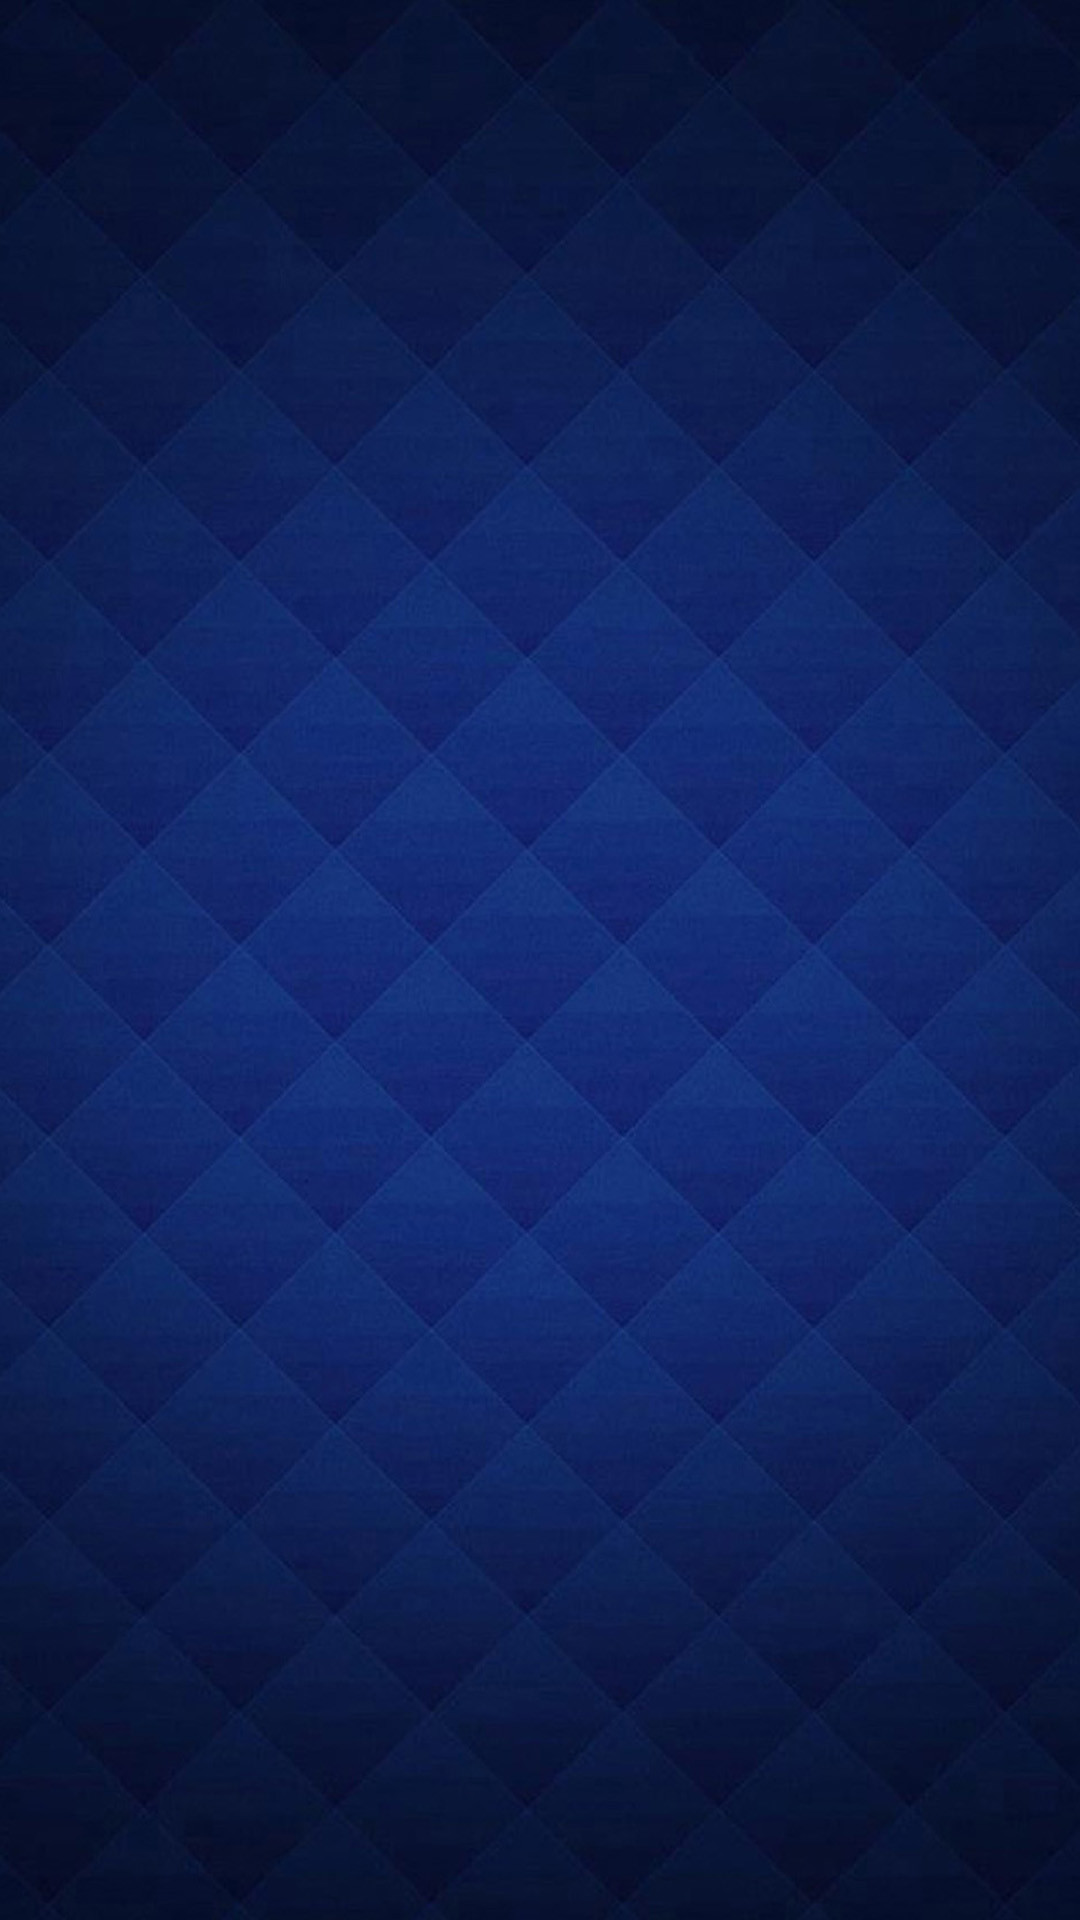 Light Blue Texture Wallpaper (51+ images)